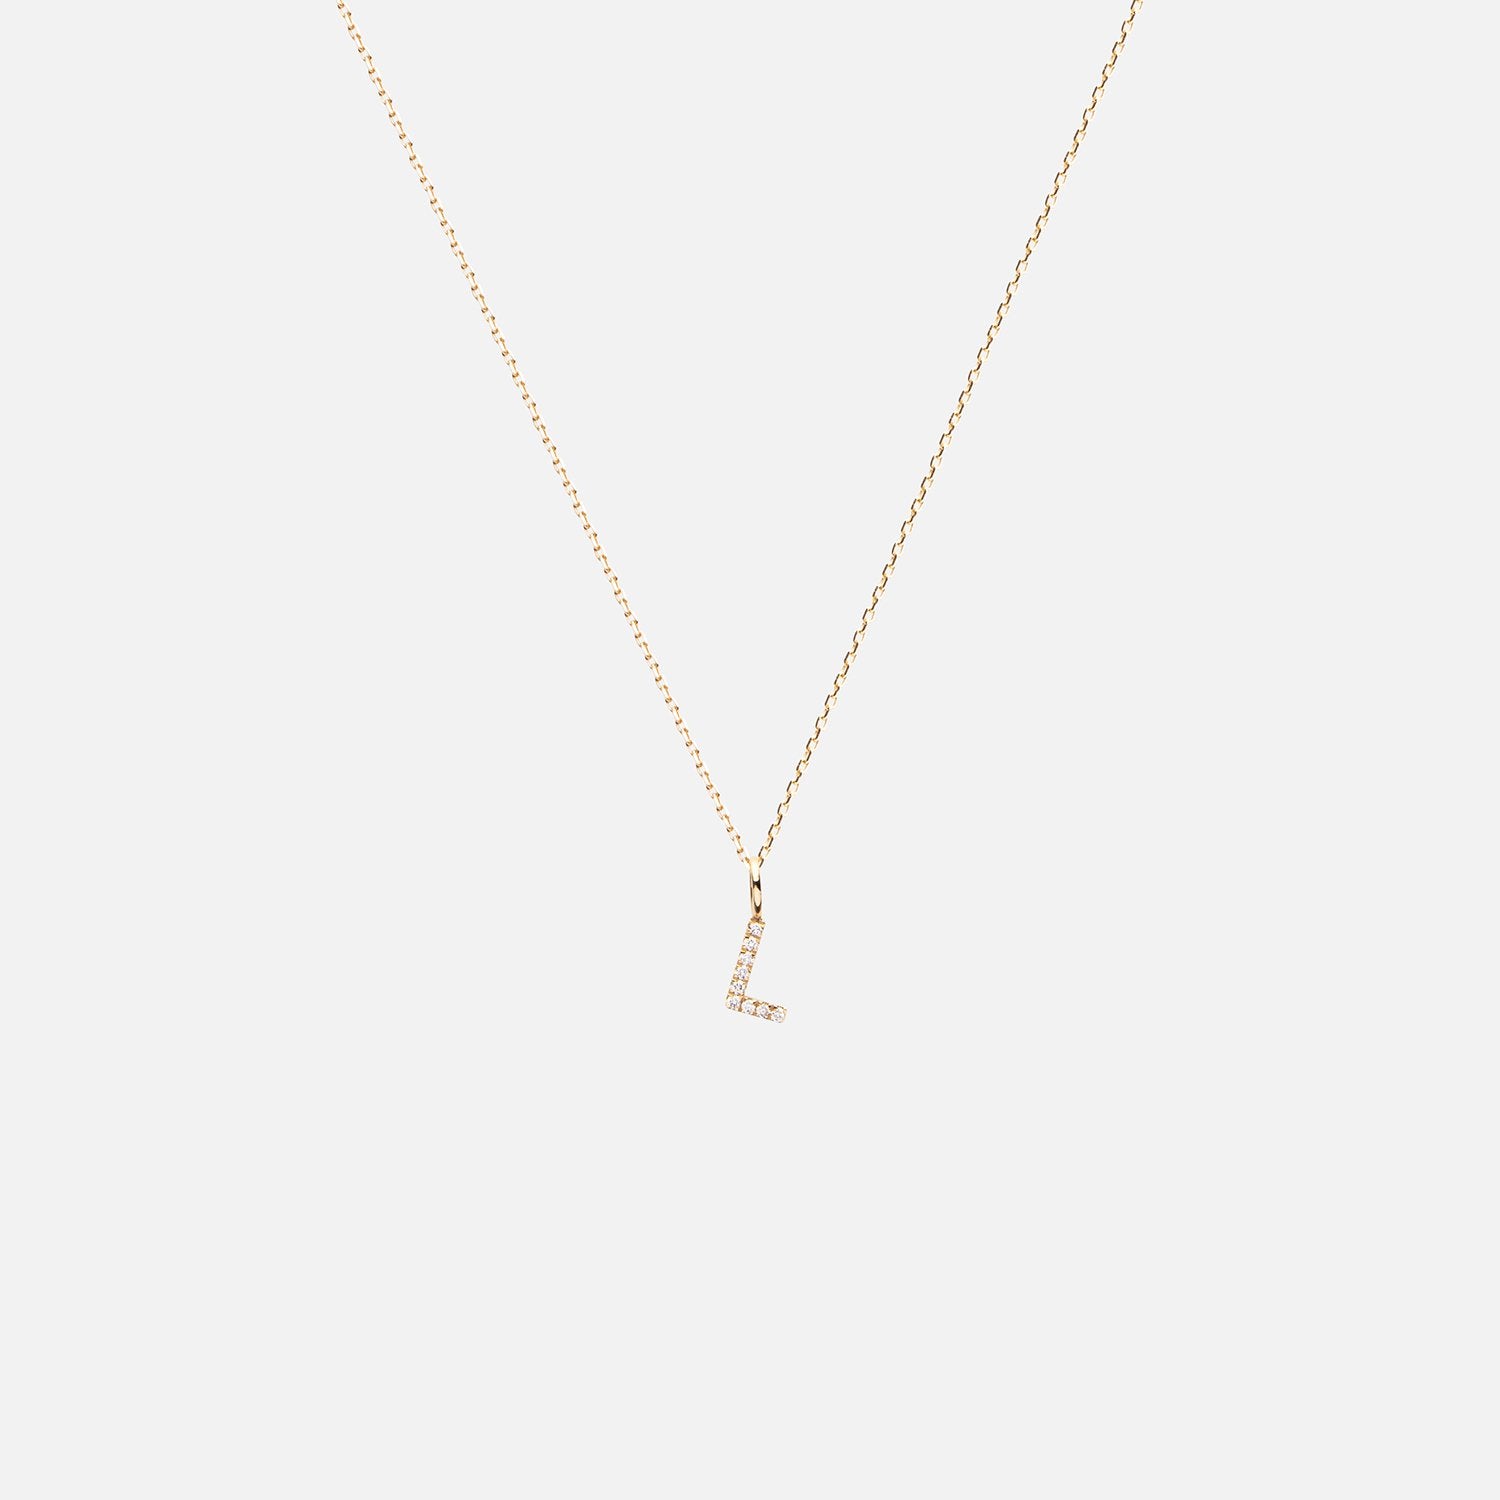 Love letter necklace shop online